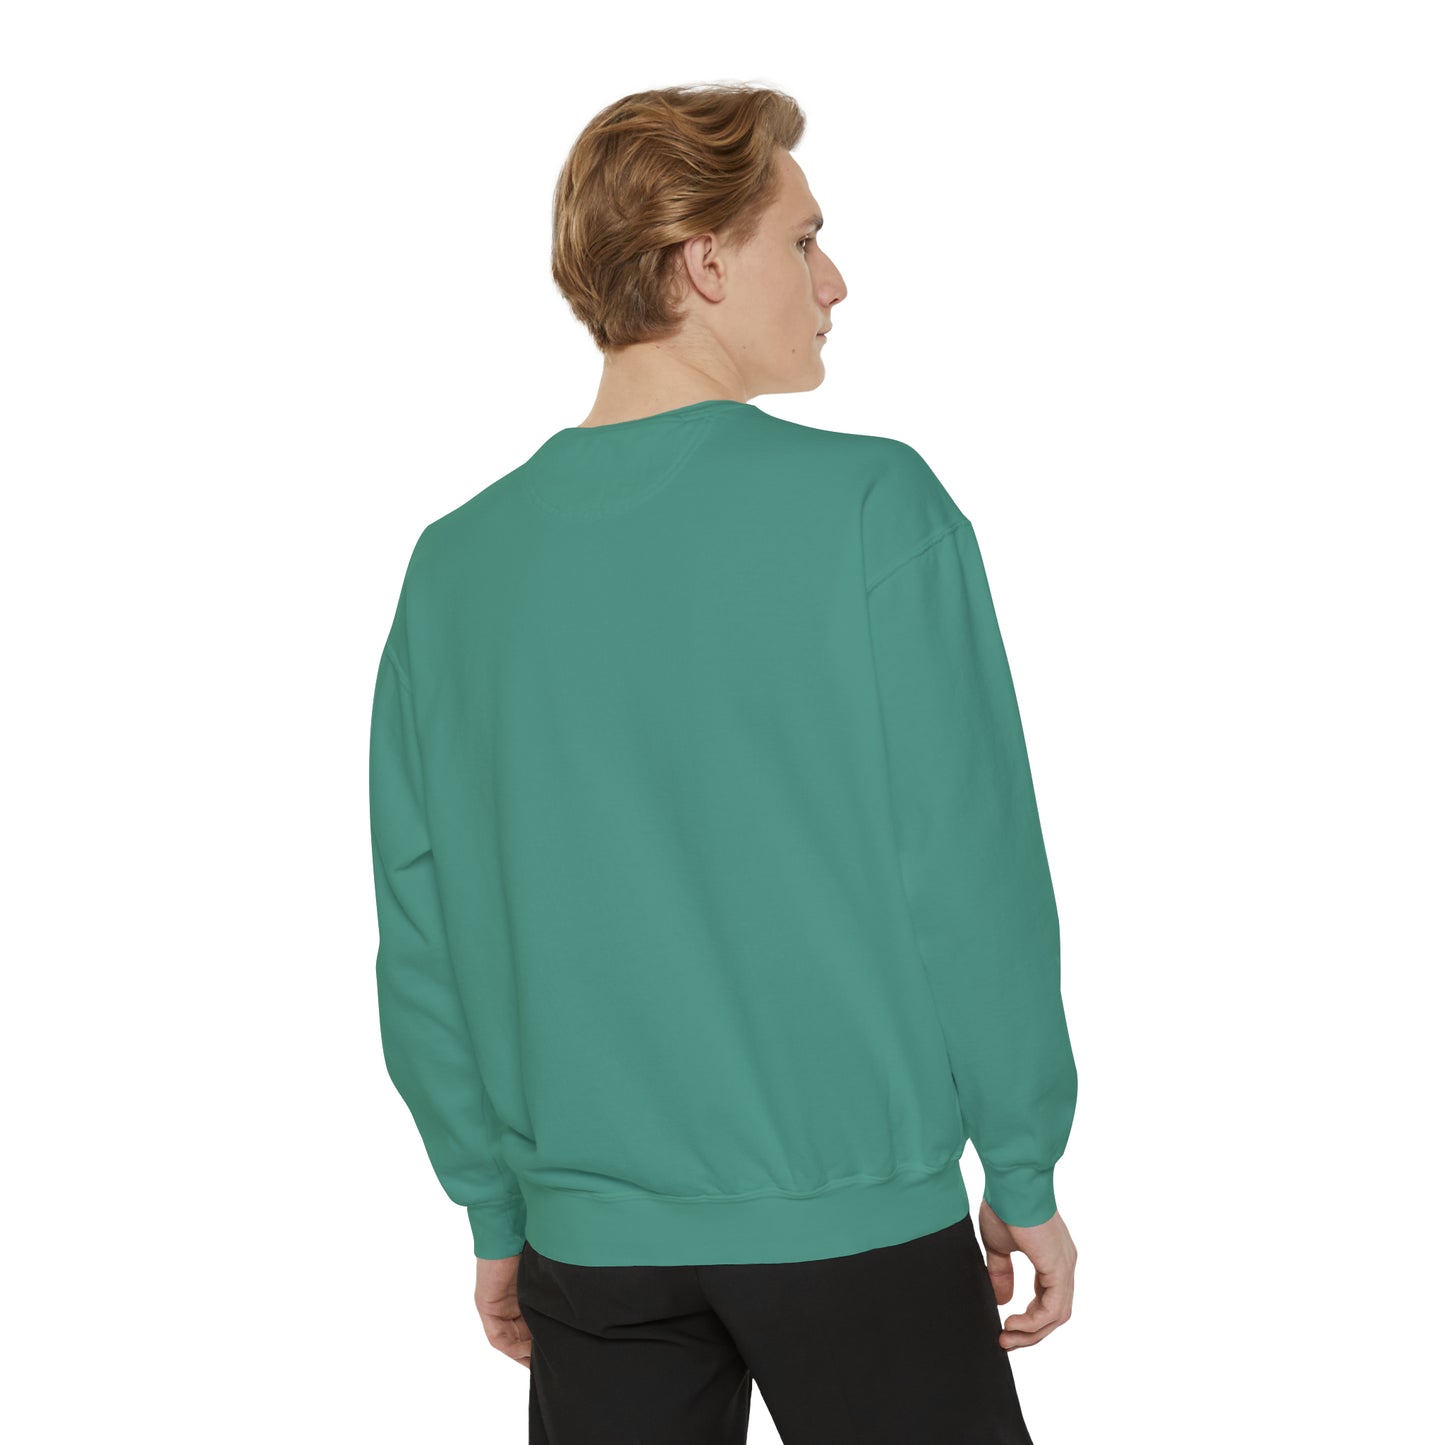 North Pole Unisex Garment-Dyed Sweatshirt